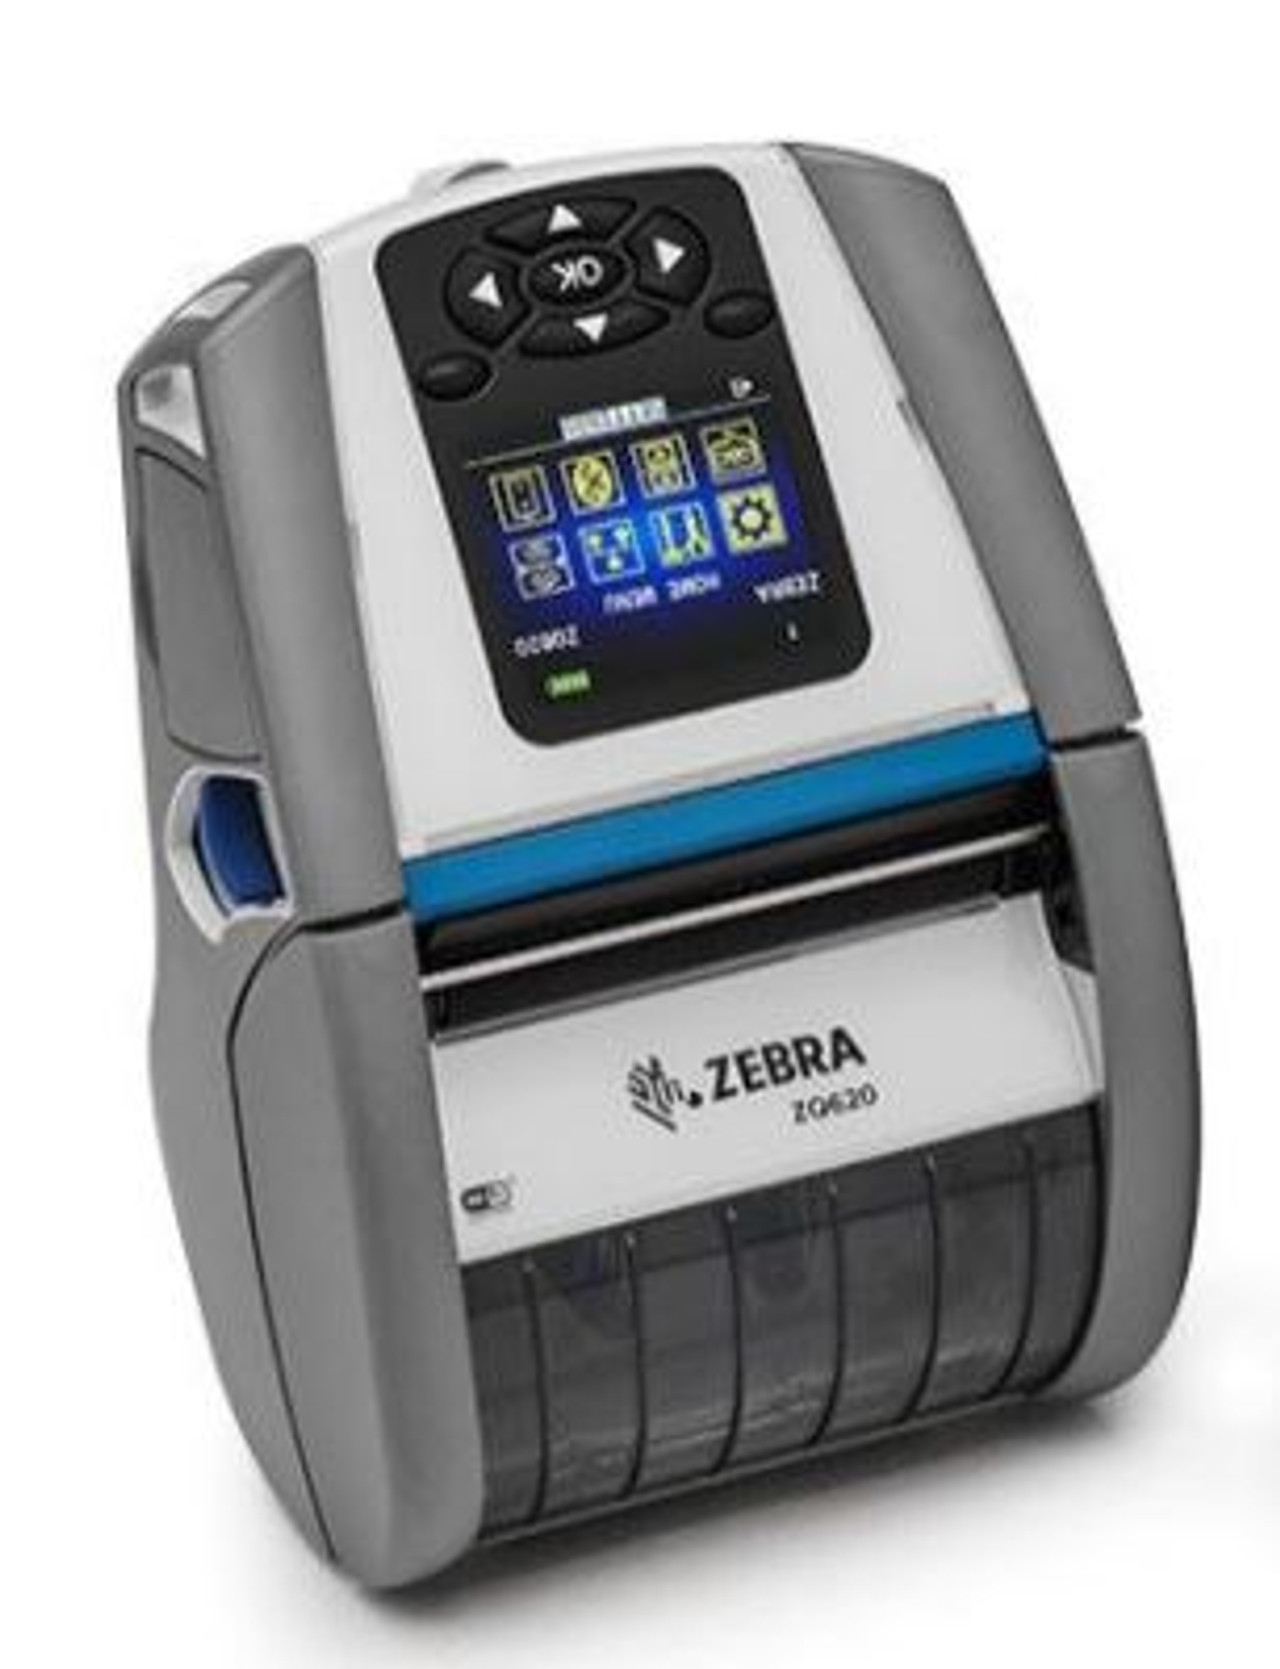 Zebra Zq610 Hc Direct Thermal Mobile Printer For Healthcare 2719